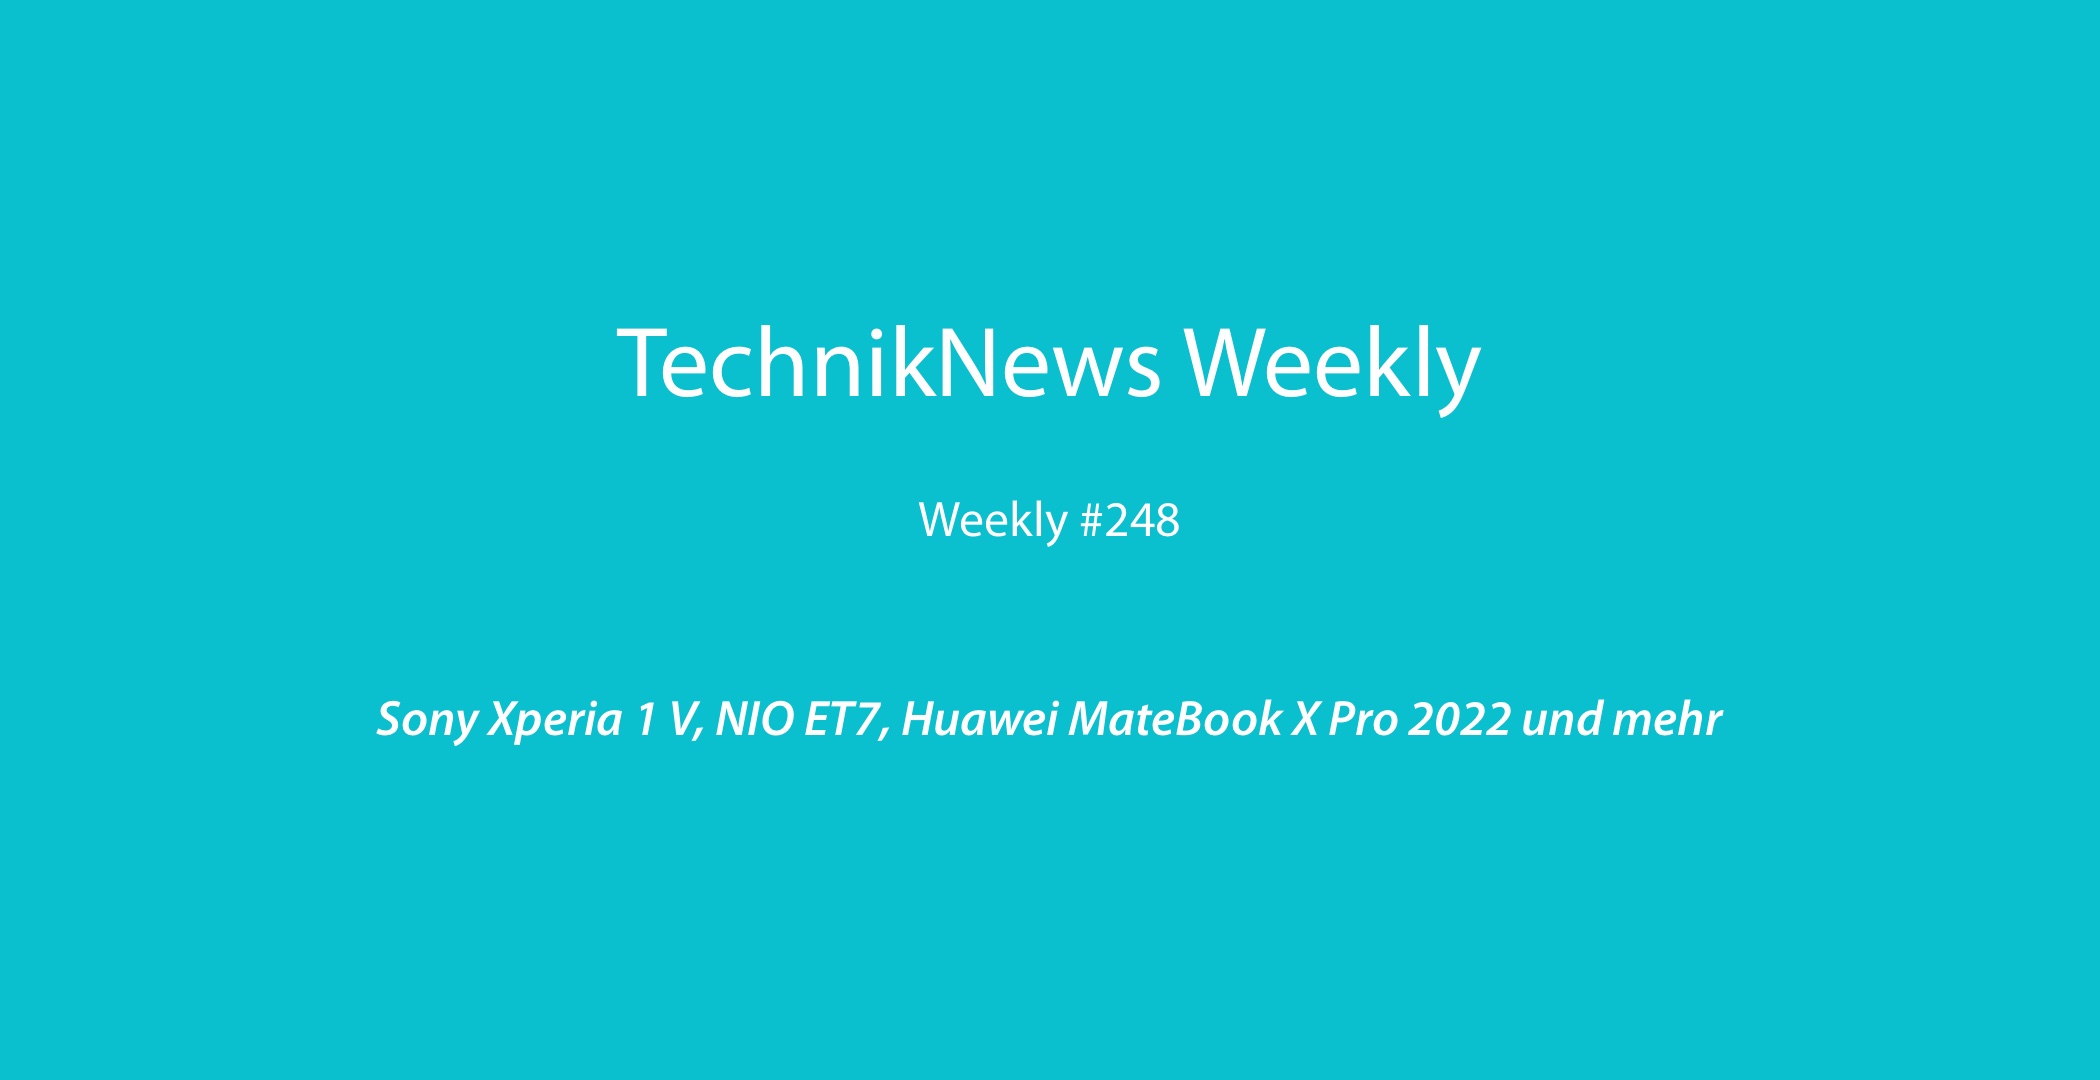 TechnikNews Weekly #248